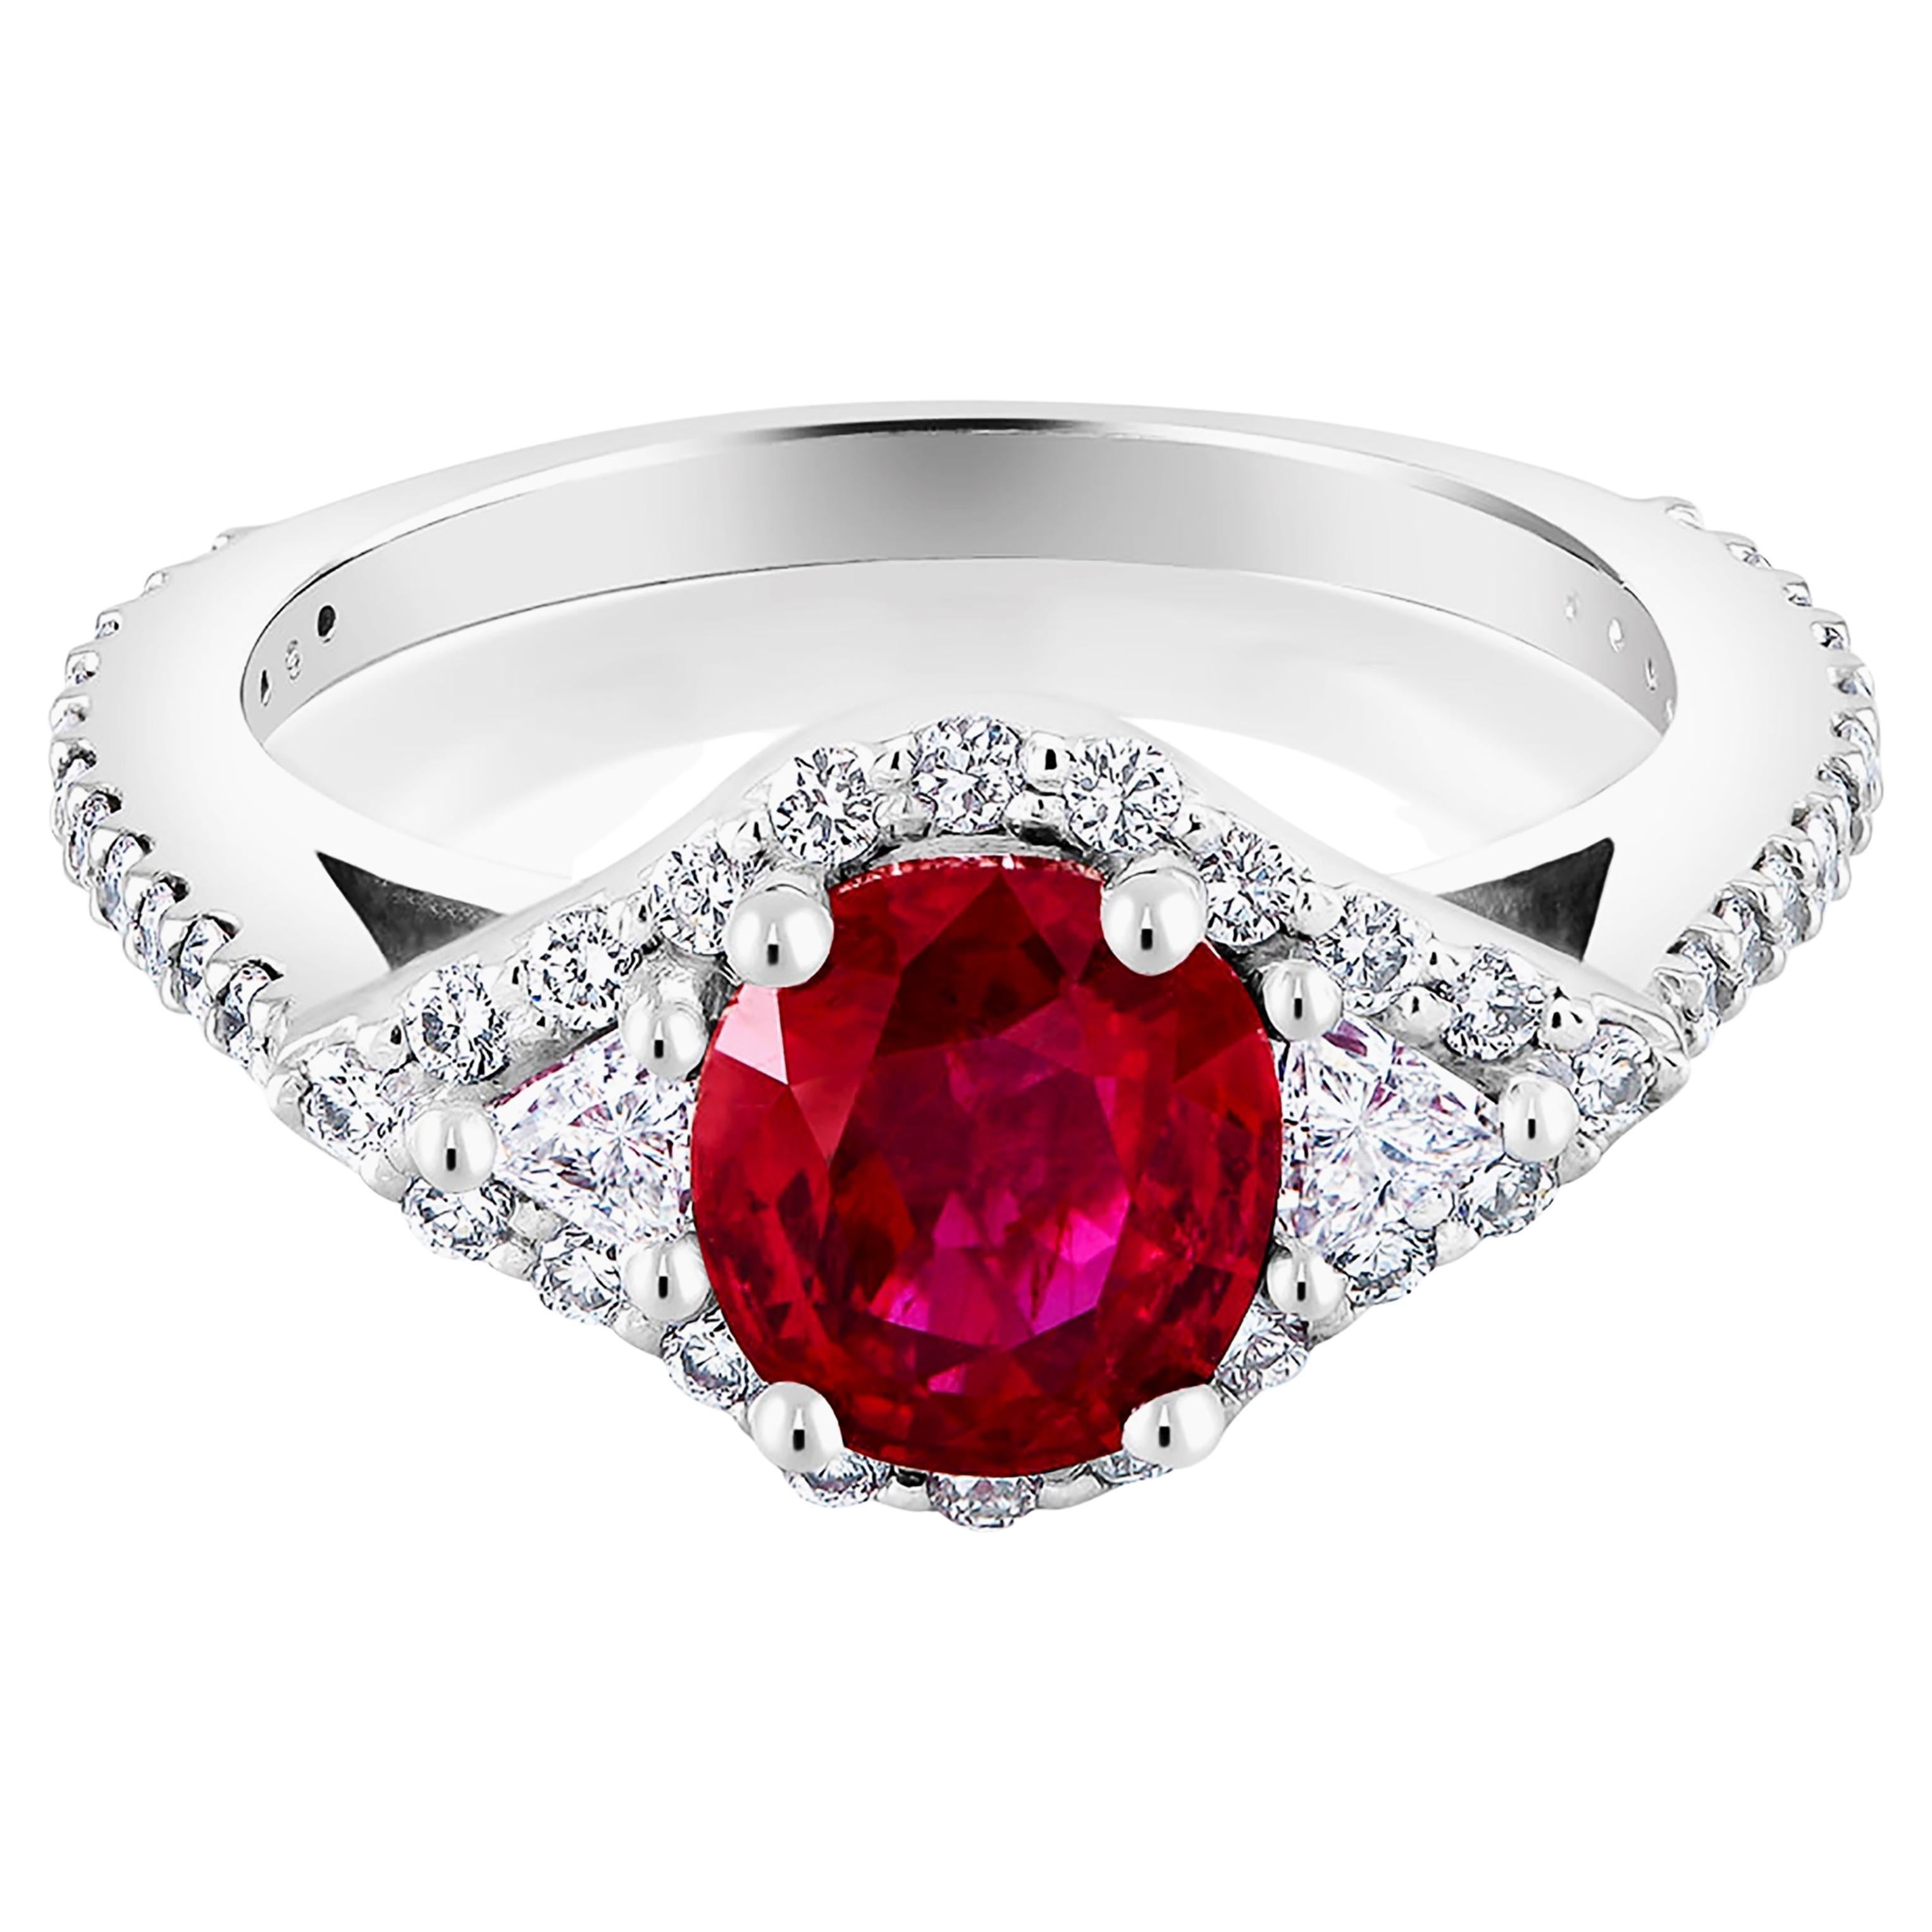 No Heat Magok Mined Burma Ruby Diamond Platinum Ring GIA Certificated